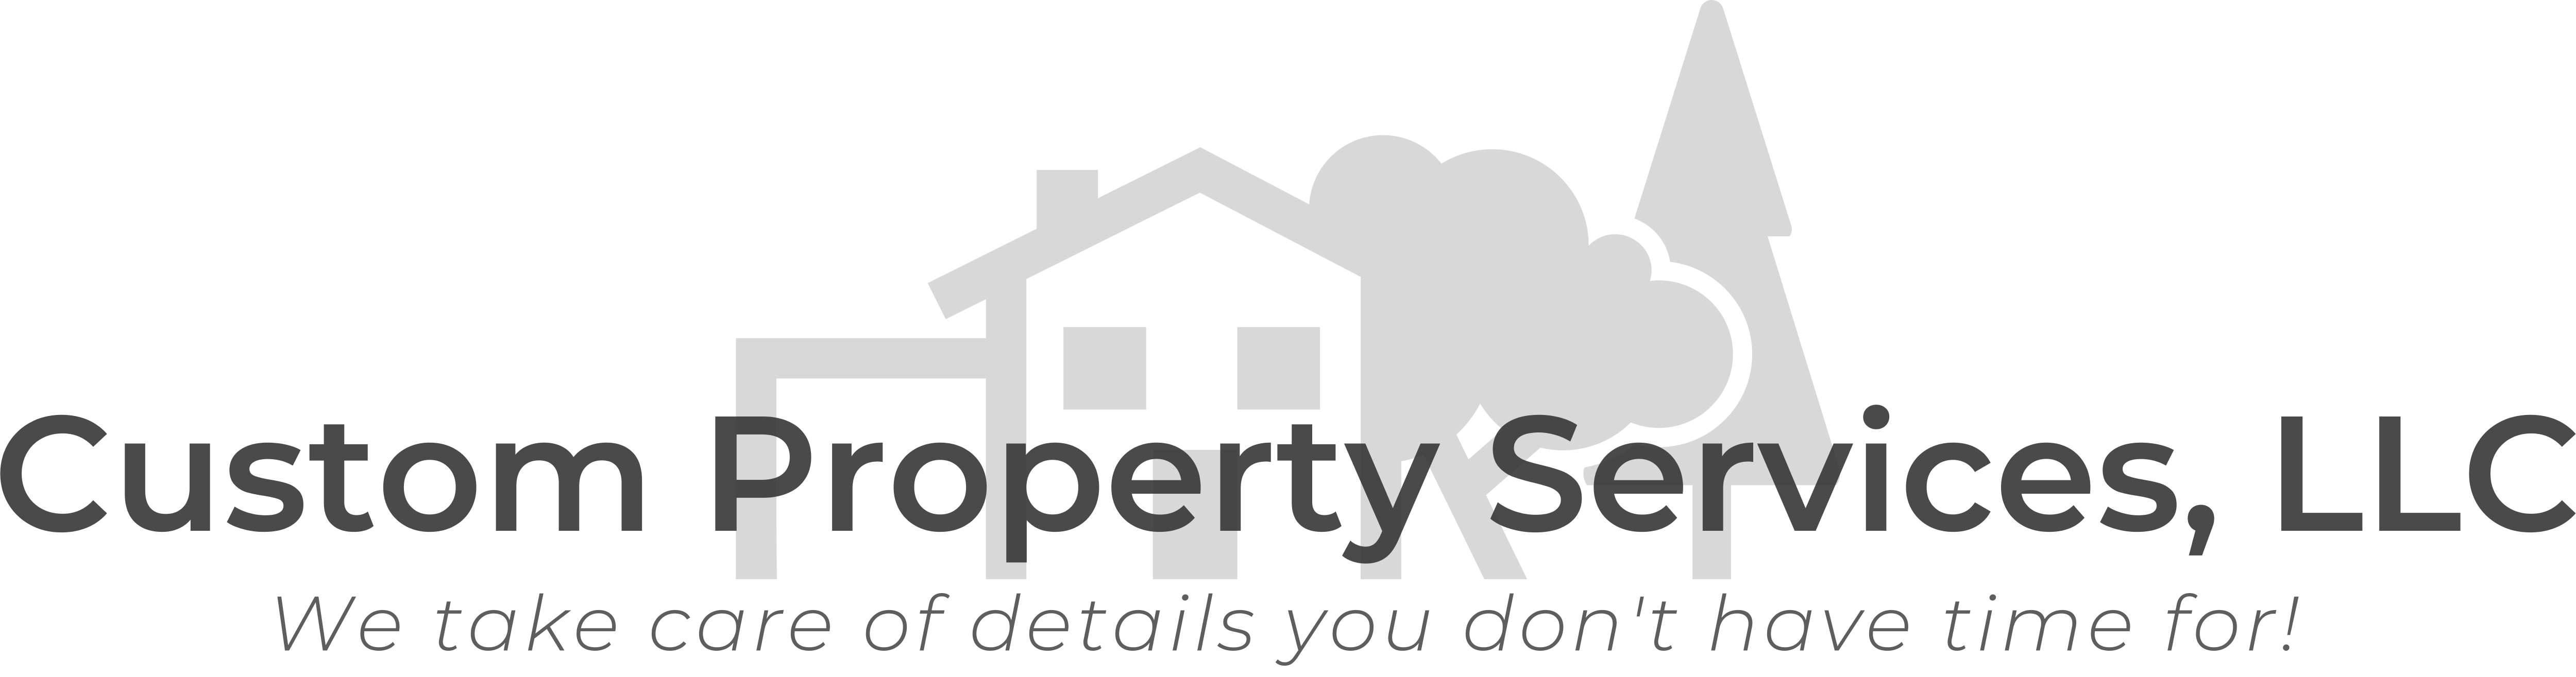 Custom Property Services, LLC